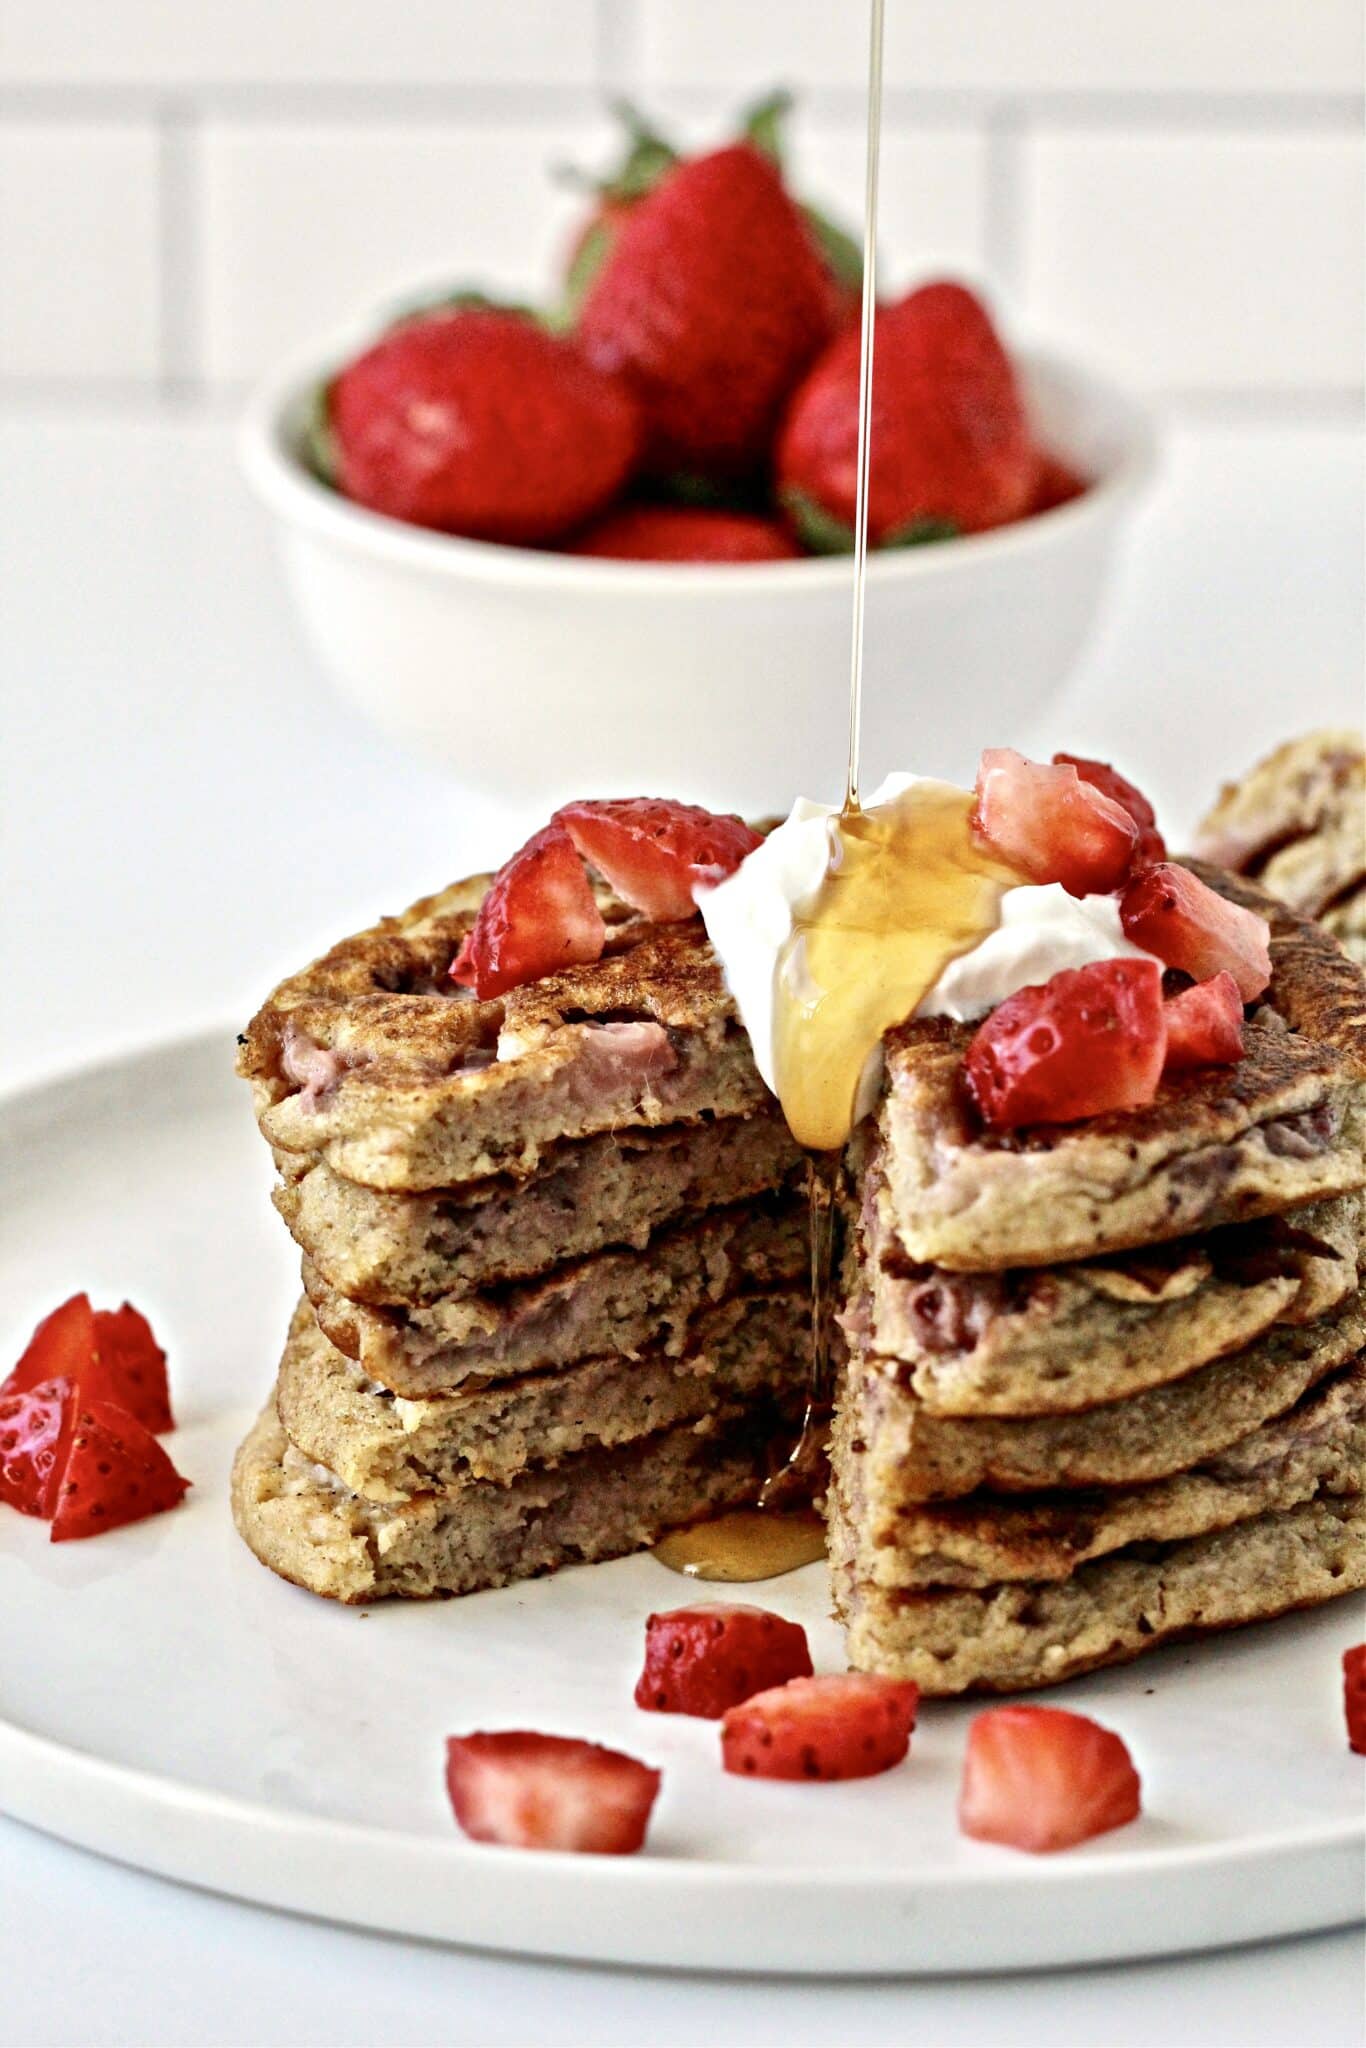 Strawberry Oatmeal Blender Pancakes